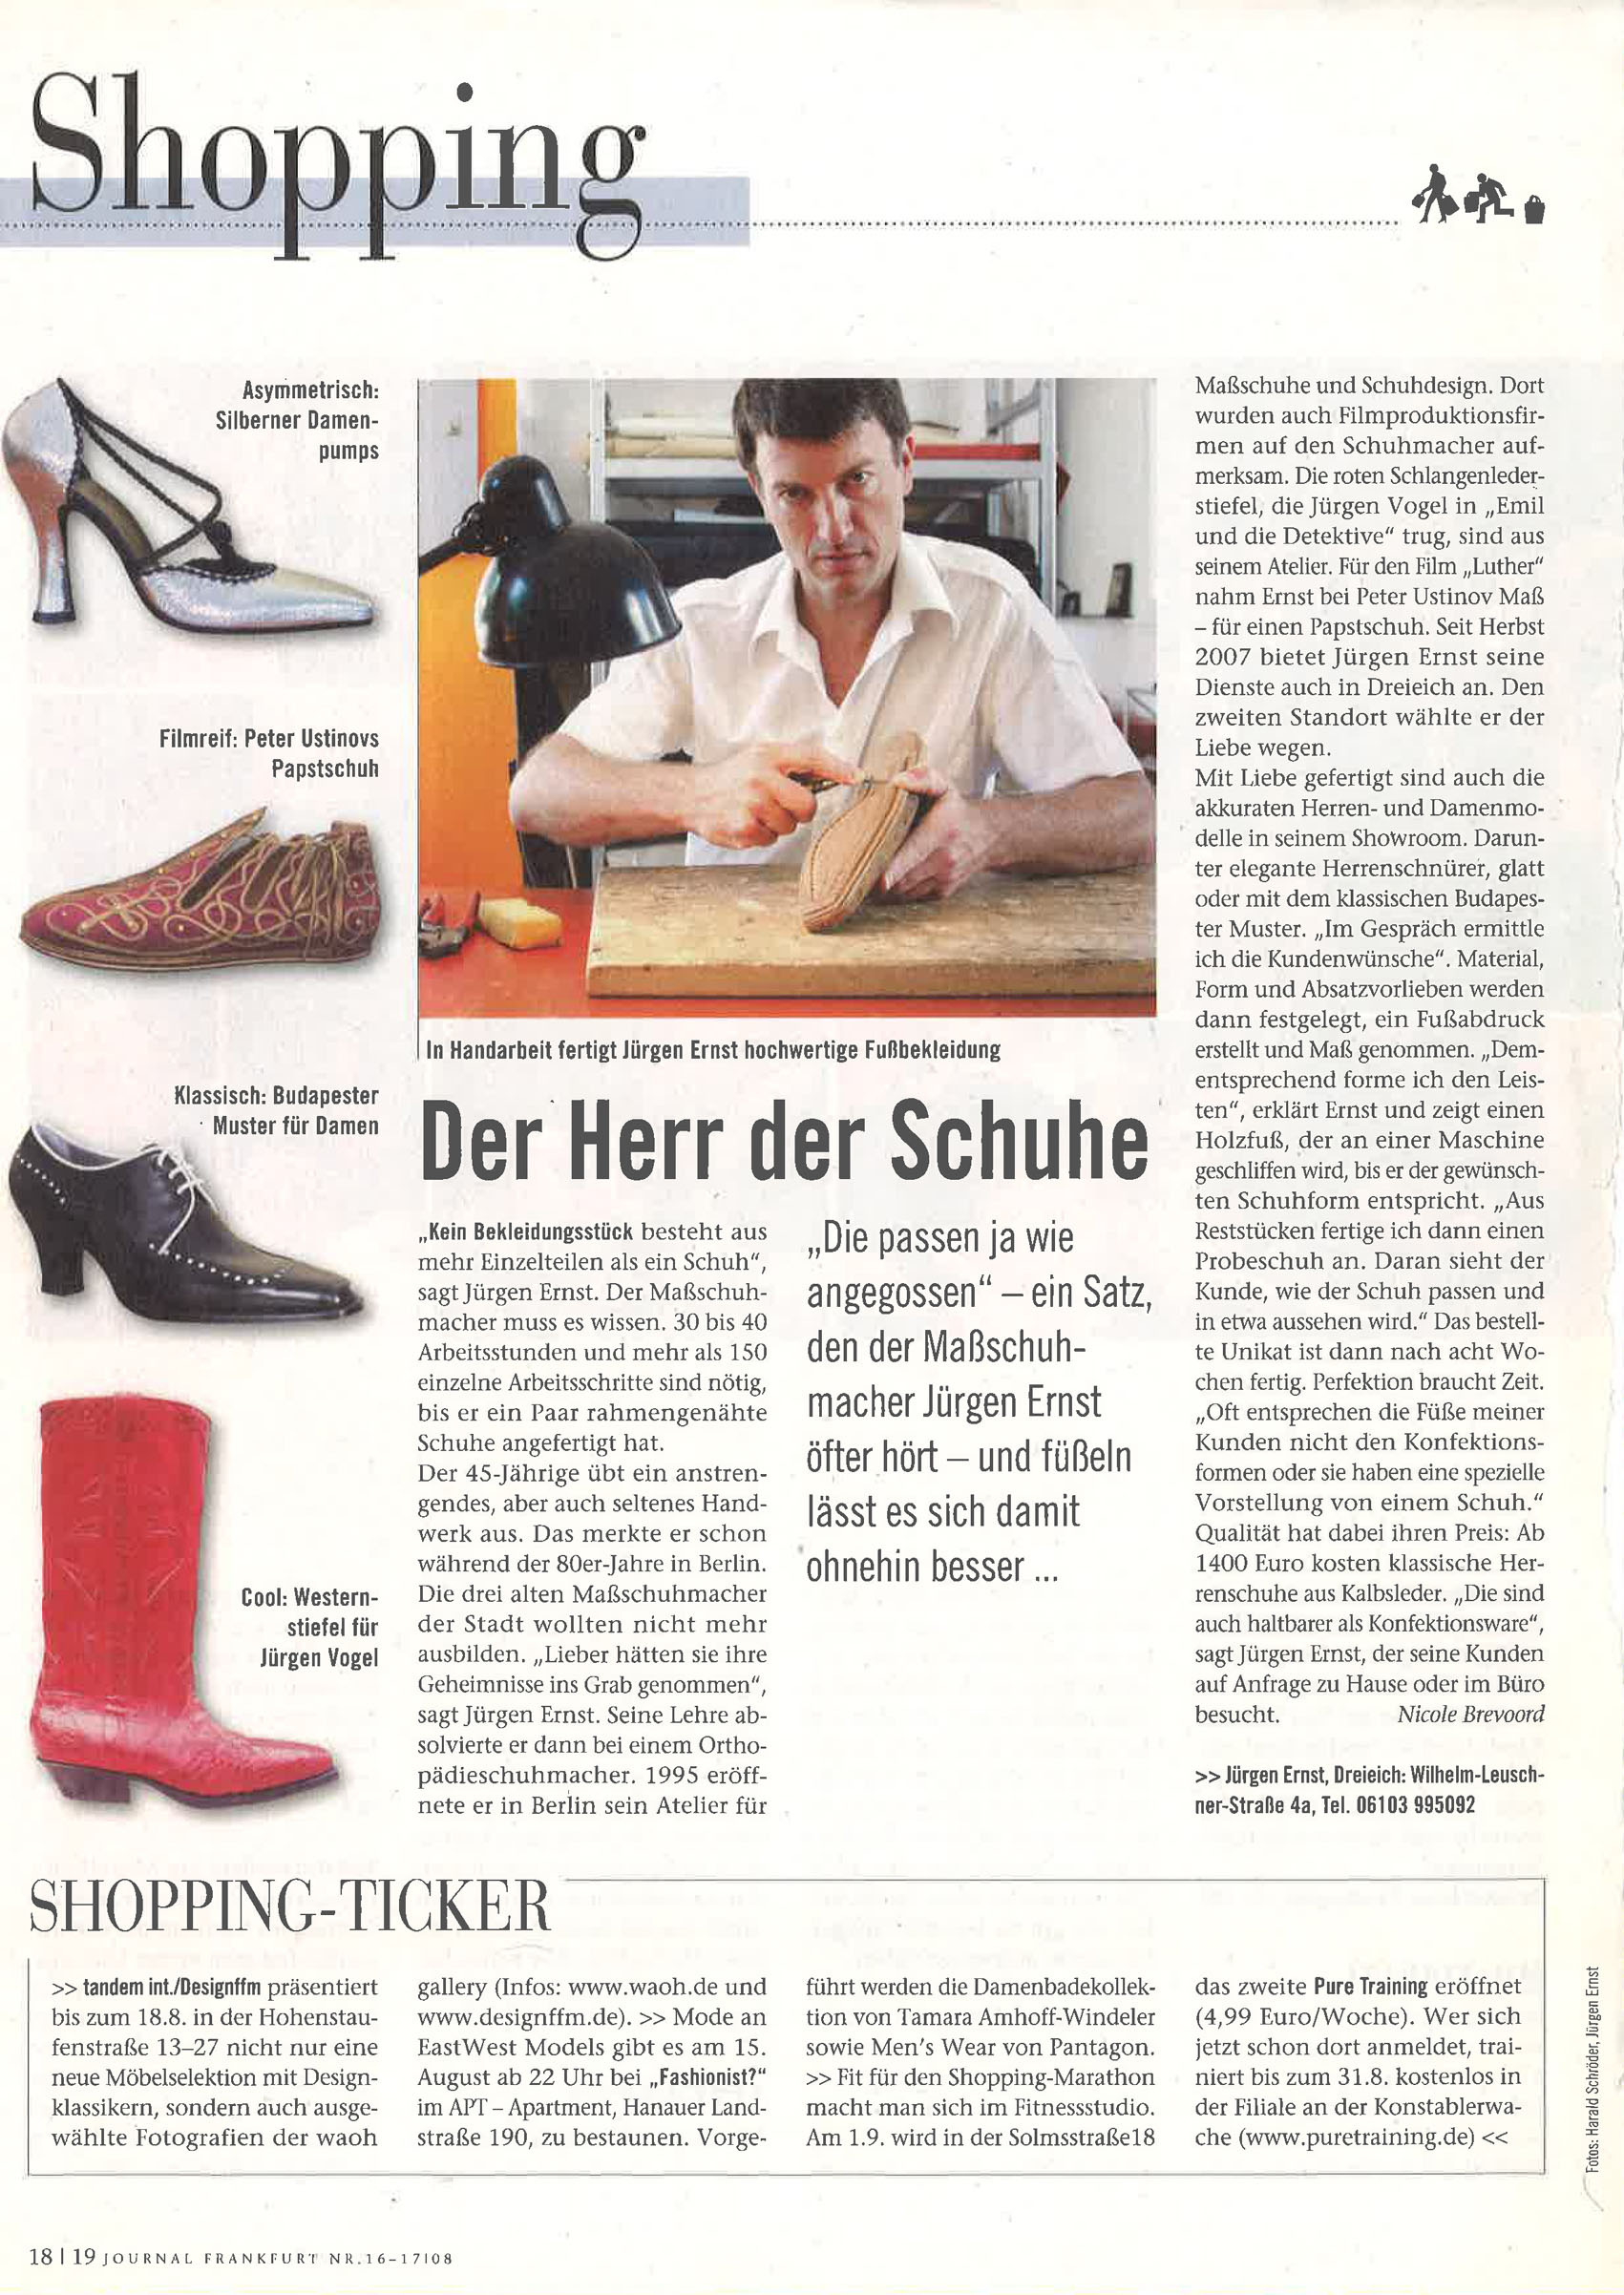 Jürgen Ernst - Der Herr Der Schuhe - 2008 Journal Frankfurt - Maßschuhe